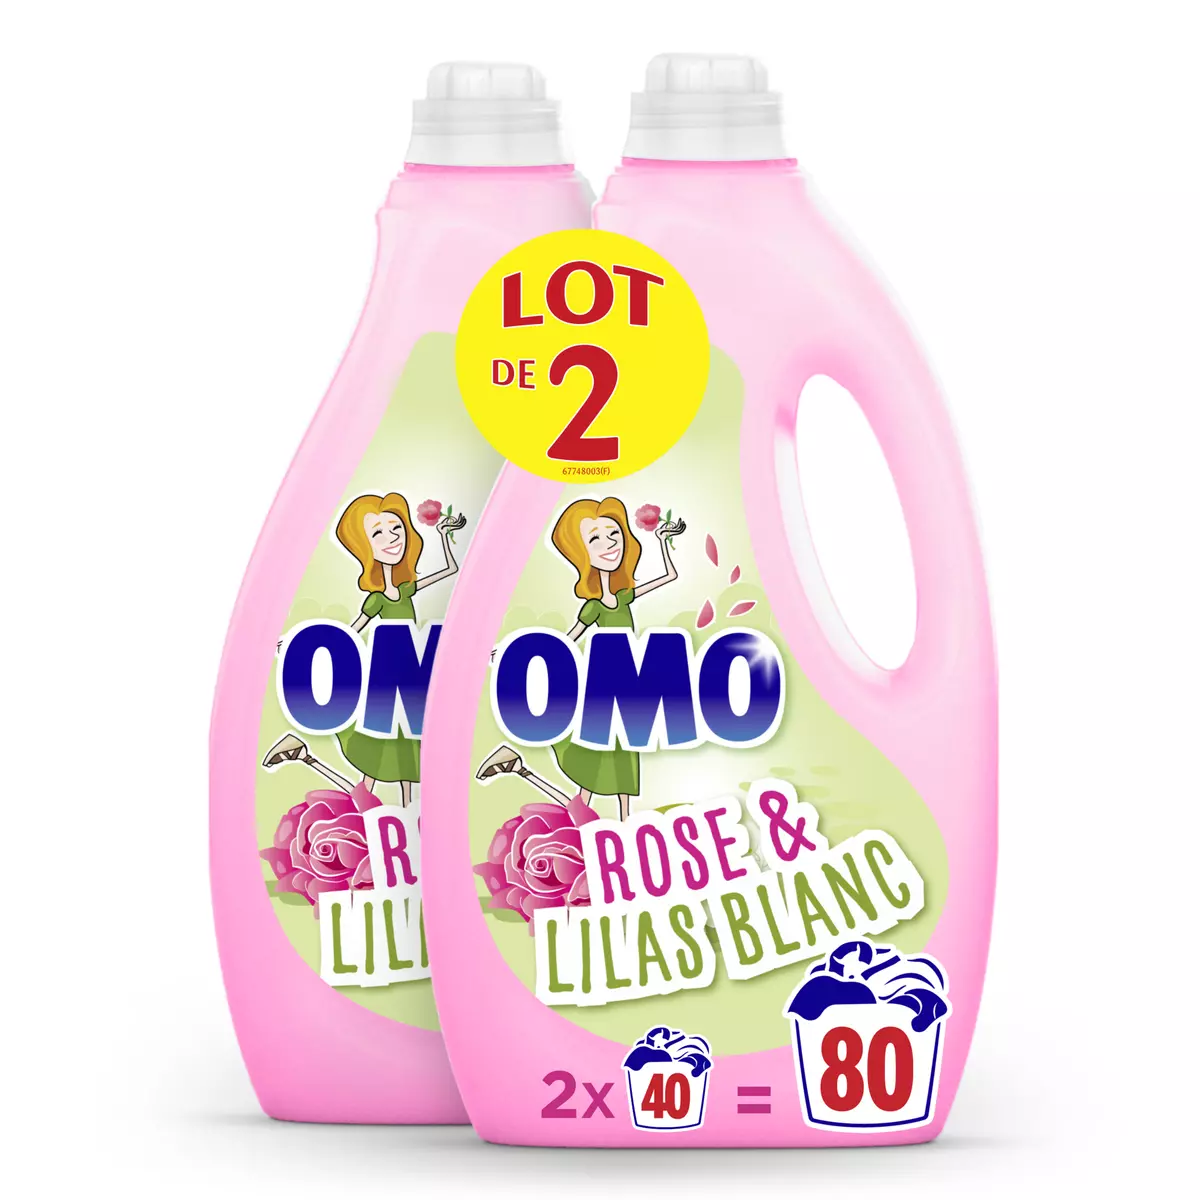 OMO Lessive liquide rose & lilas blanc 80 lavages 2x2l